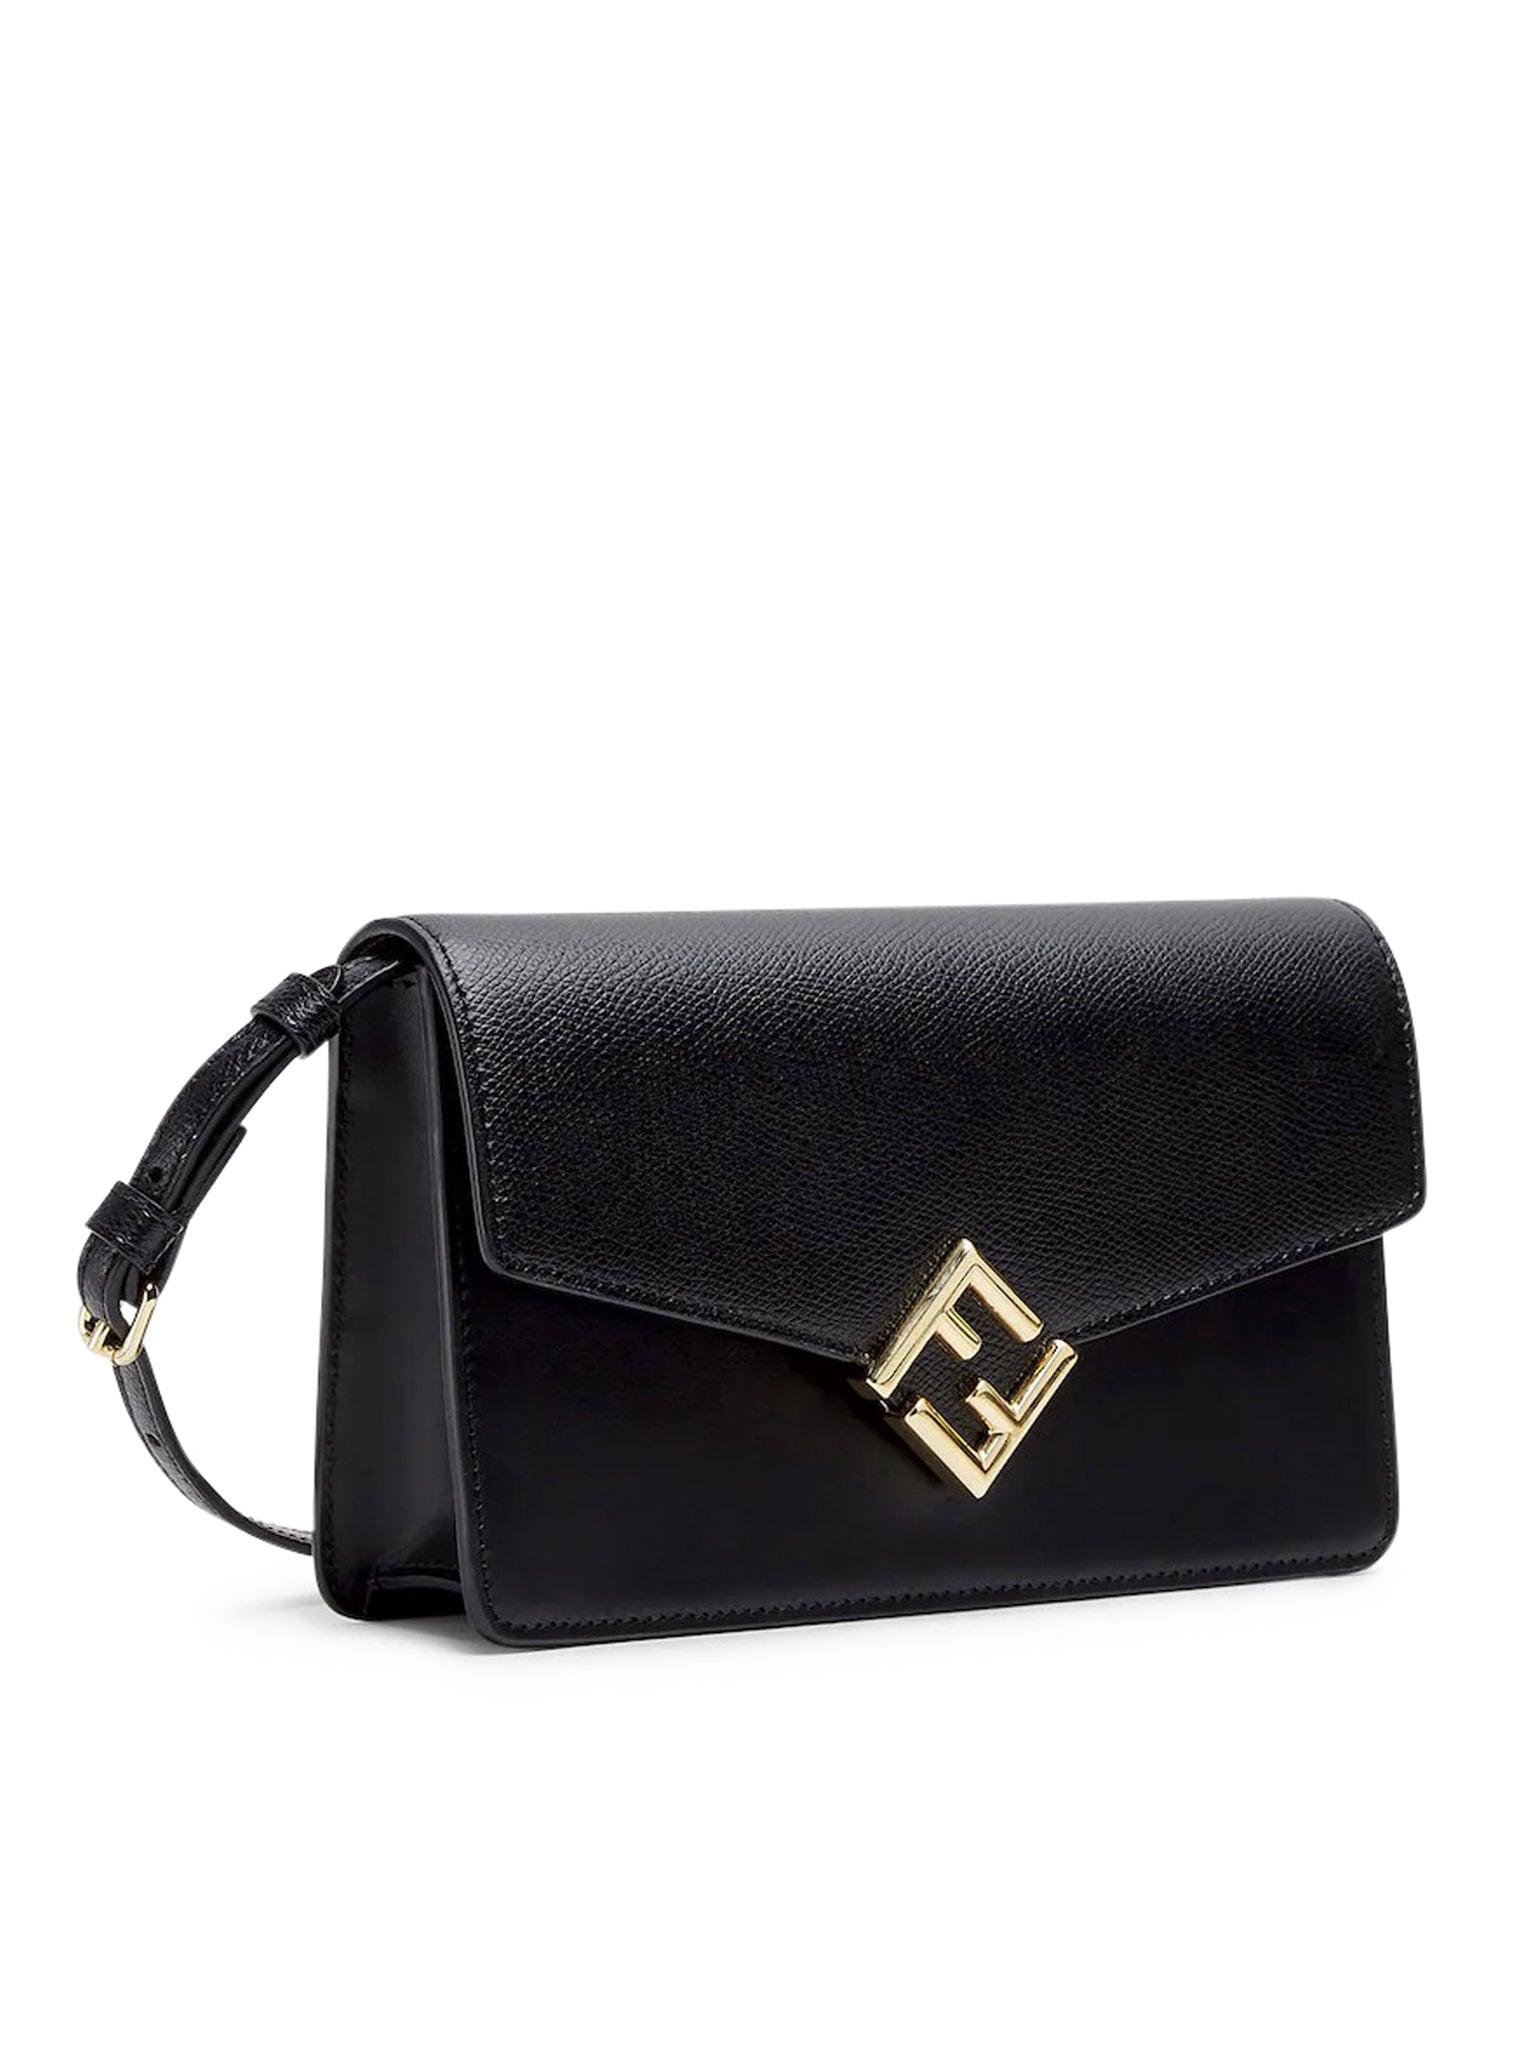 FENDI Wallet on Chain Black Leather Mini Bag